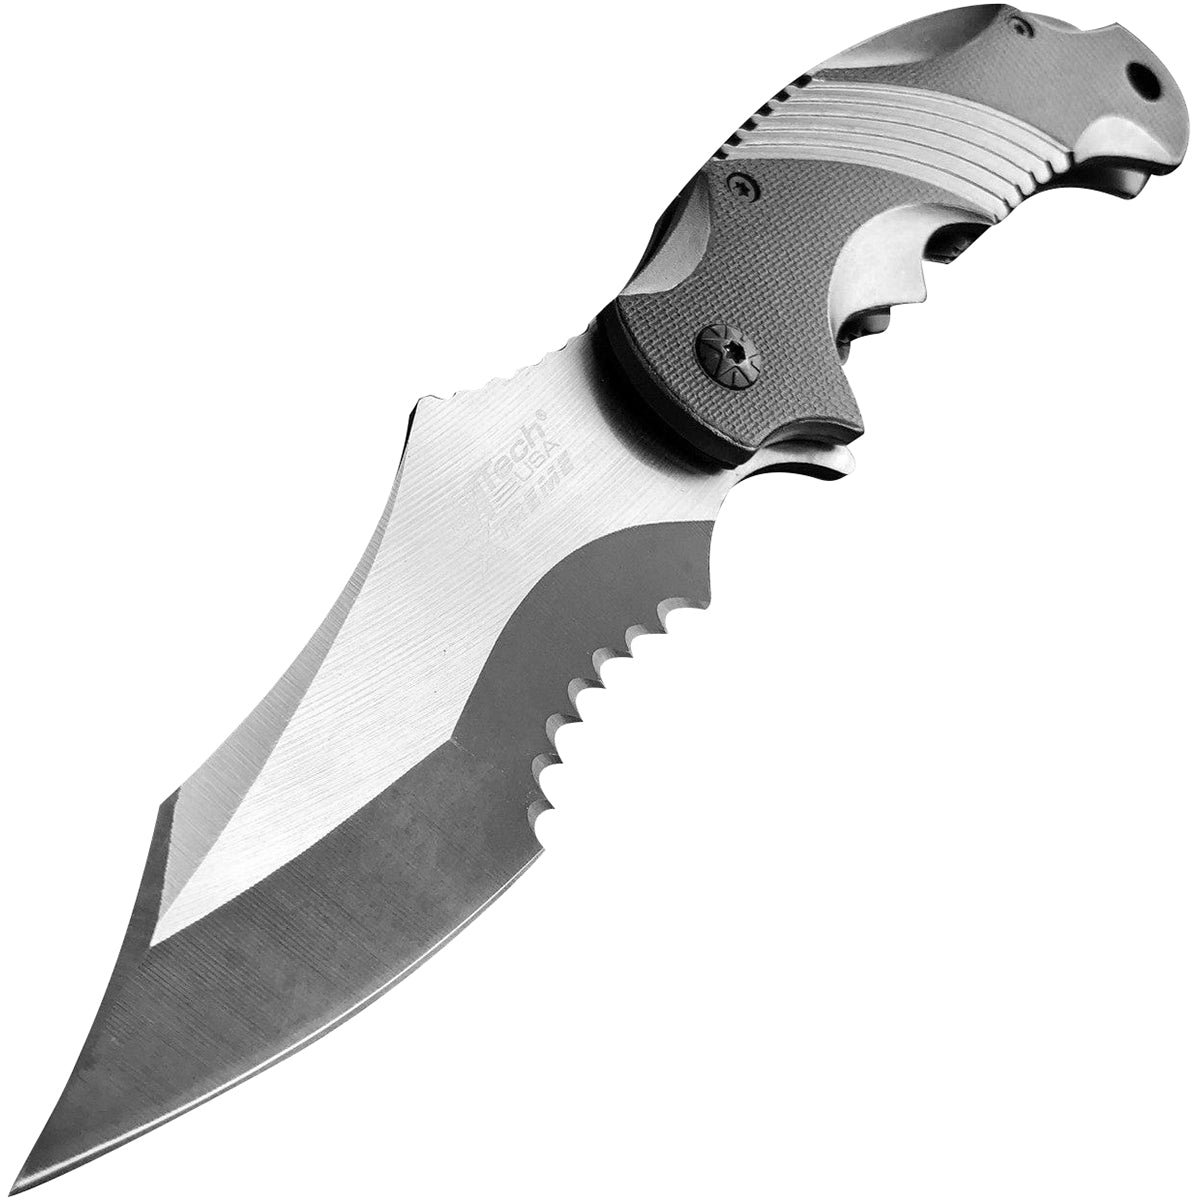 MTech USA Xtreme Linerlock Spring Assisted Folding Knife, Serrated, MX-A801GY M-Tech